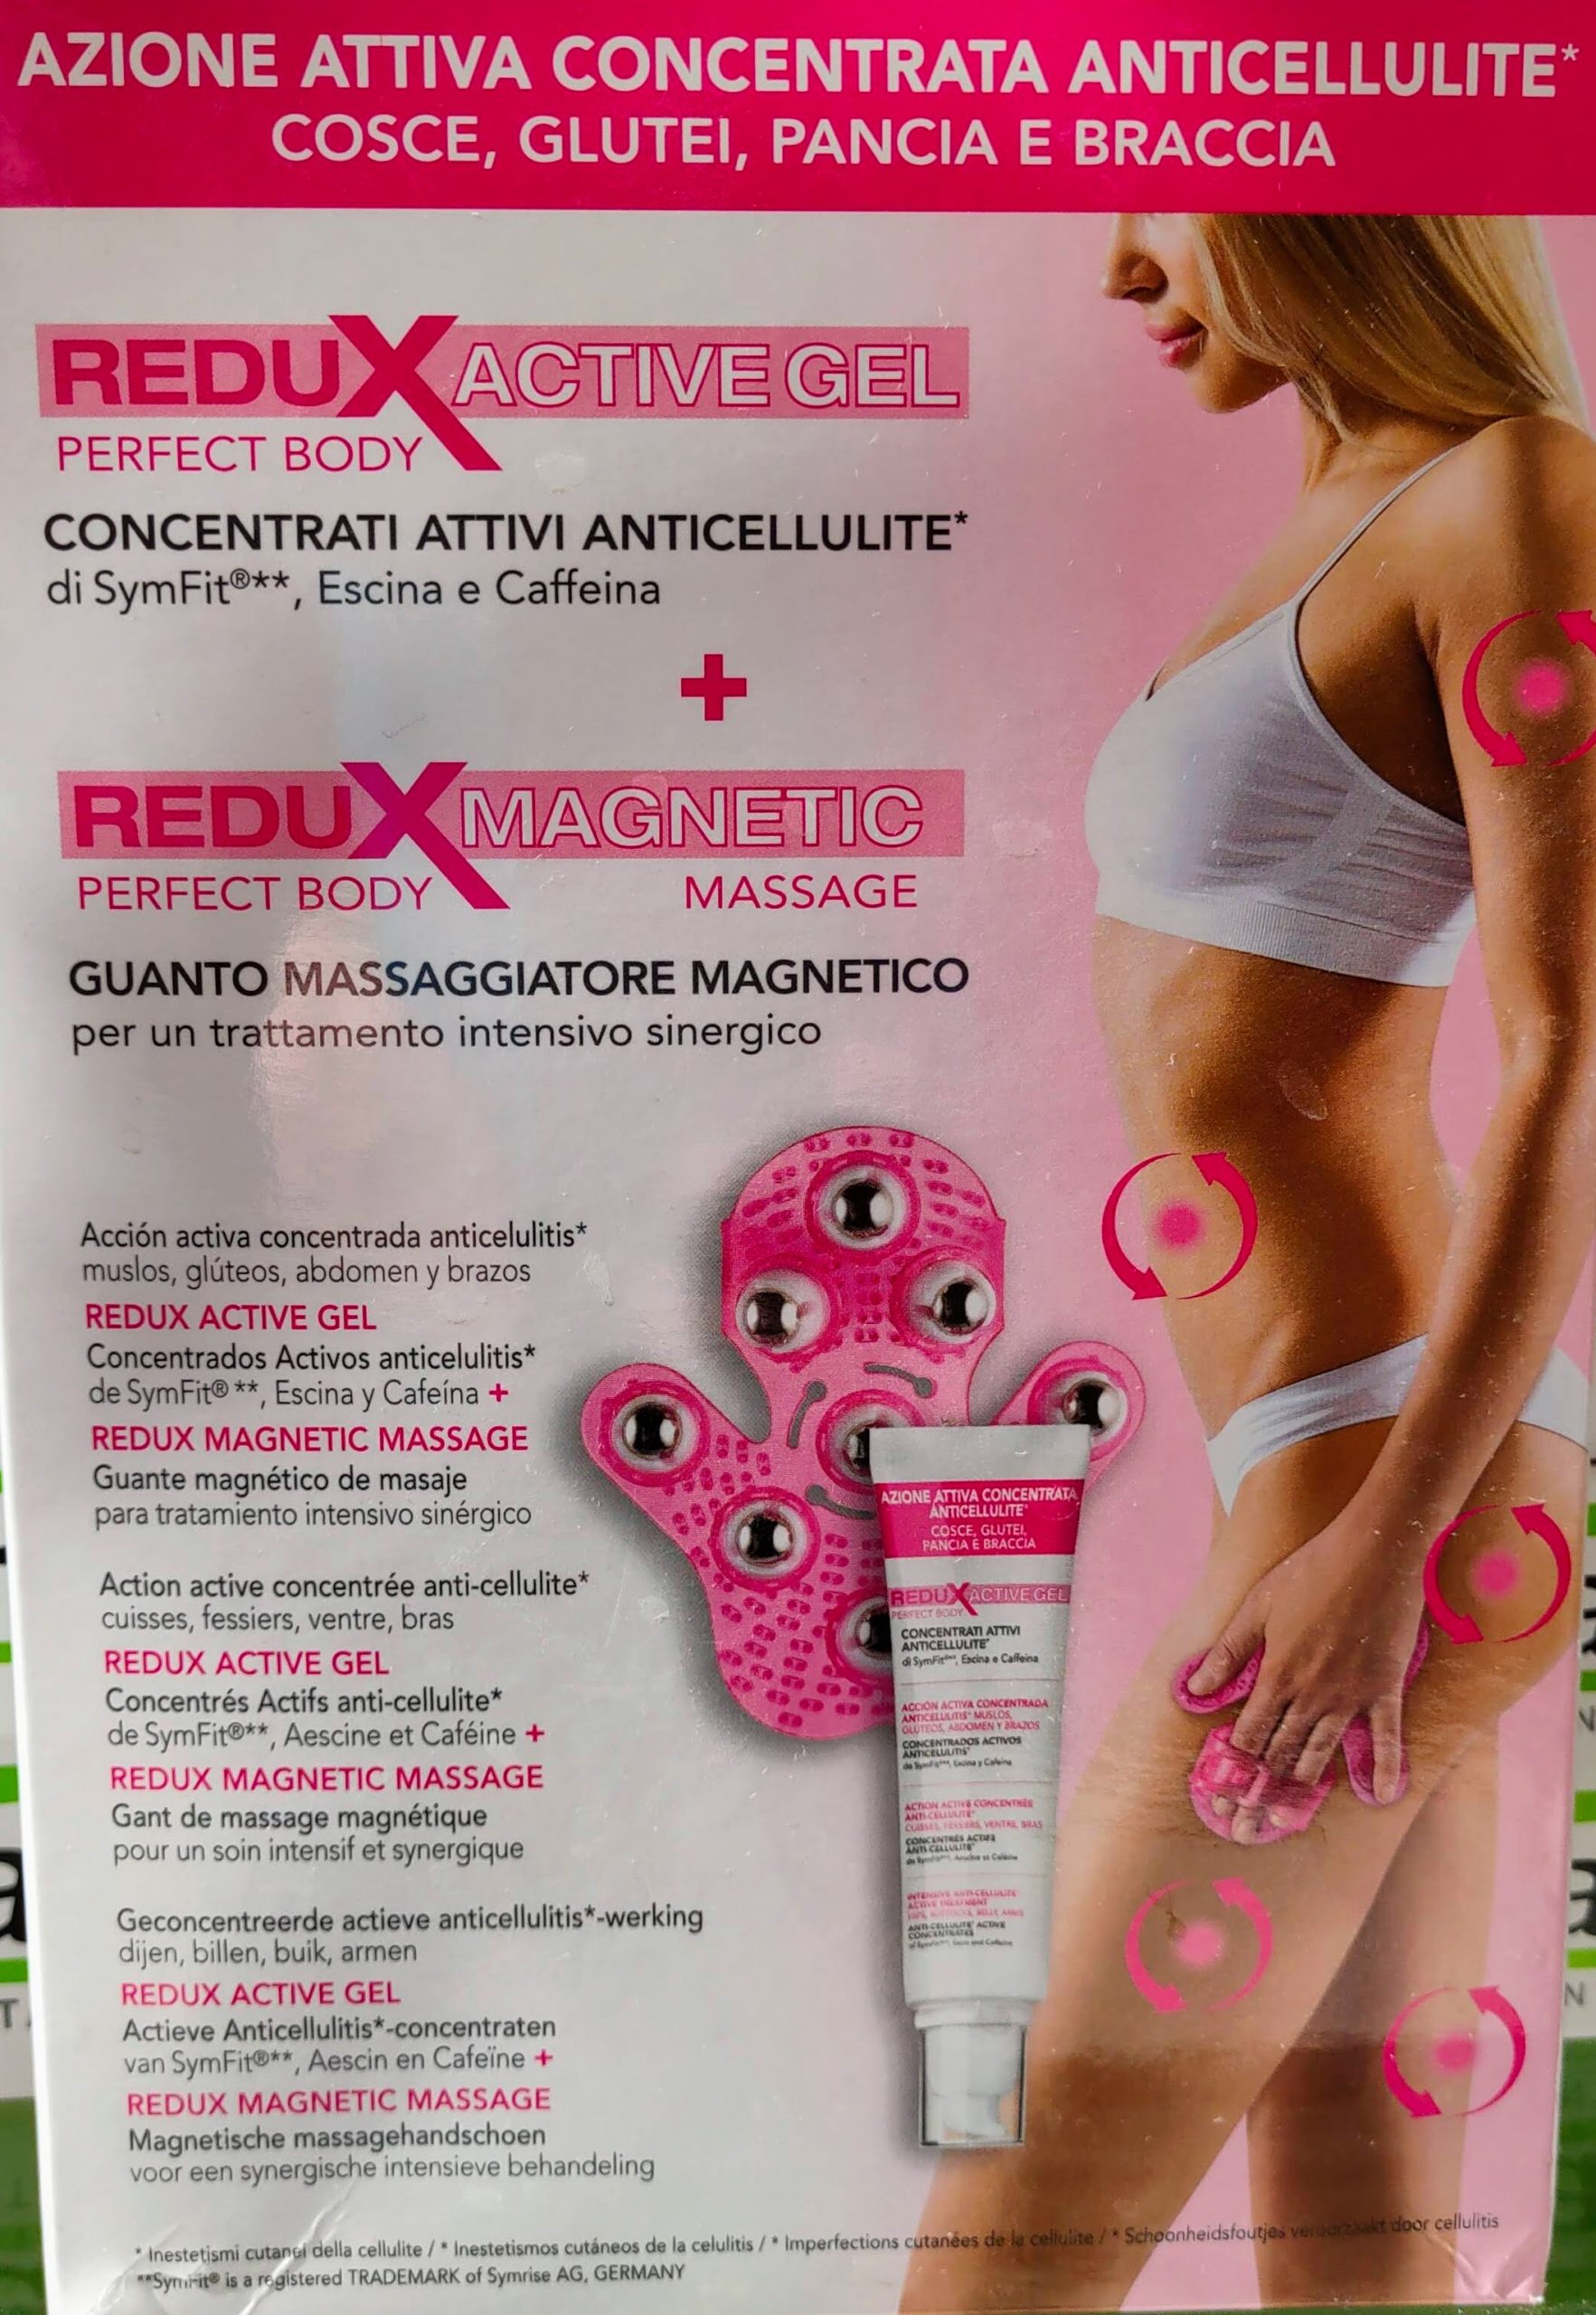 Comprar REDUX ACTIVE GEL PERFECT BODY 150ML + GUANTO REDUX MAGNETIC MASSAGE de Planet Pharma